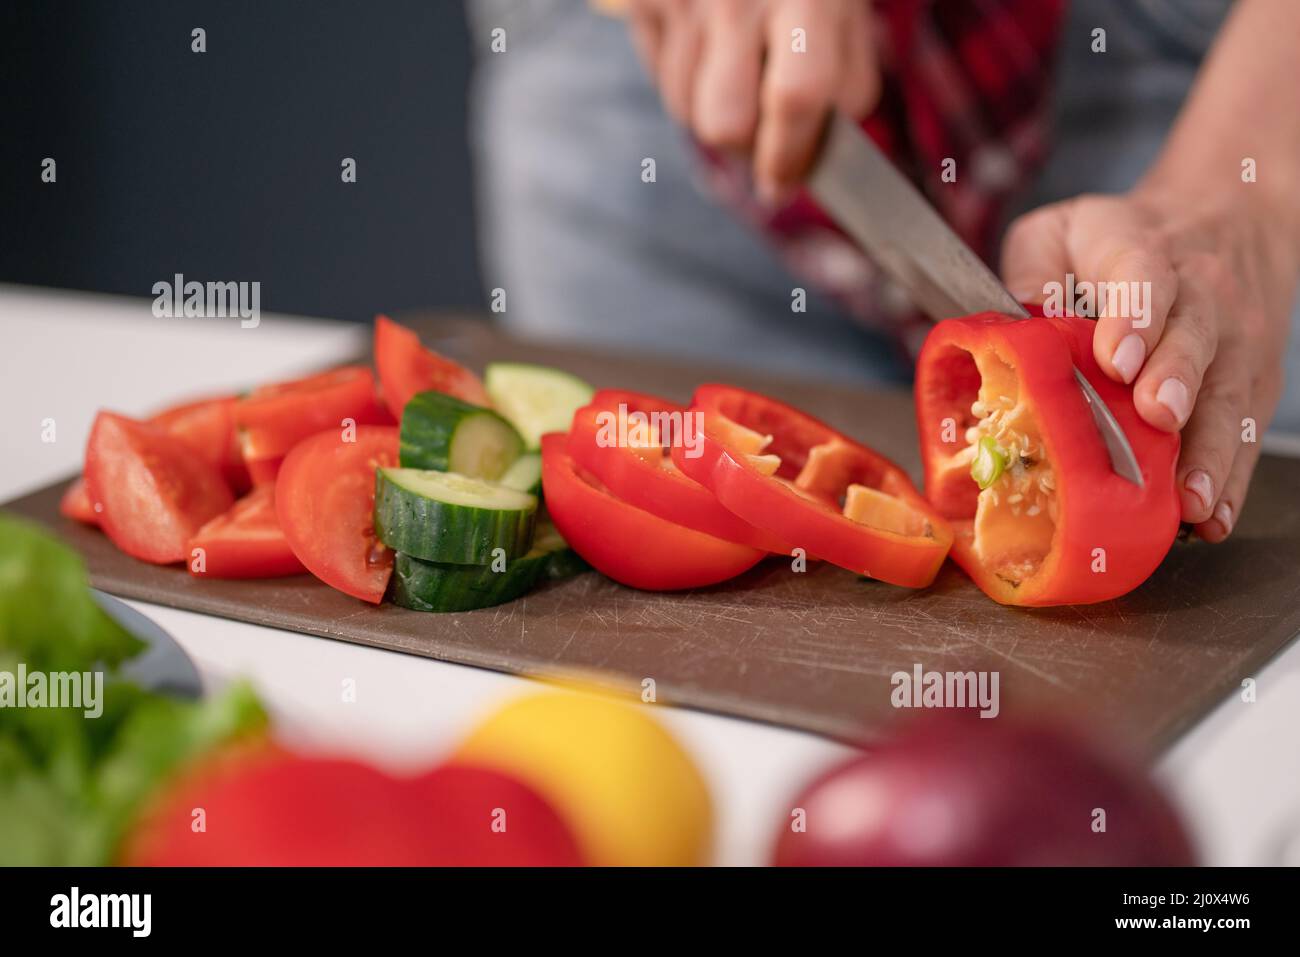 Woman cutting sweet pepper or bell pepper using knife on plastic cut board. Freshly cut vegetables for fresh salad. Healthy leav Stock Photo